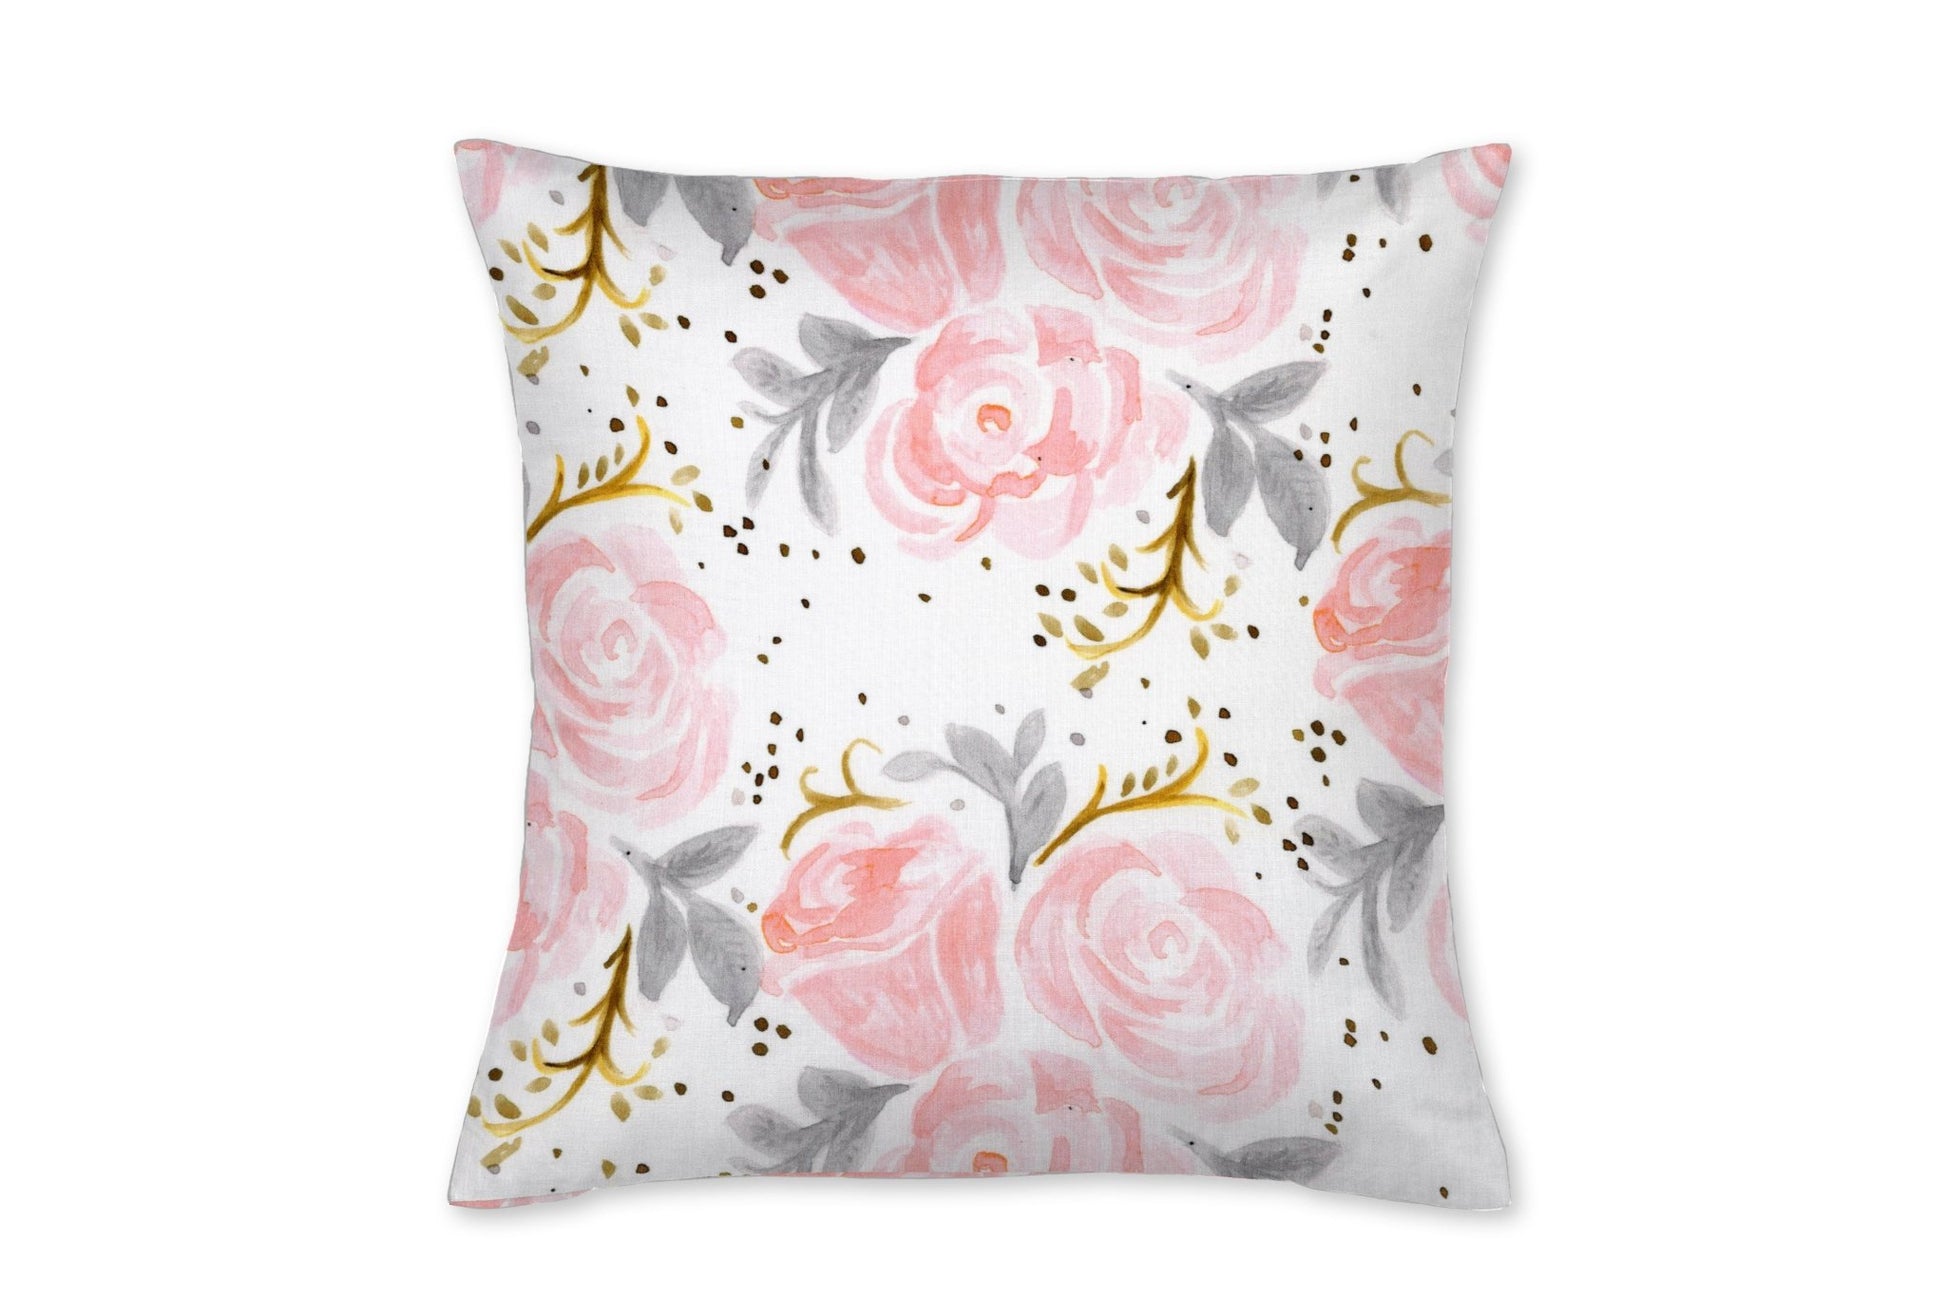 Briar Rose Floral Throw Pillow - New Arrivals Inc